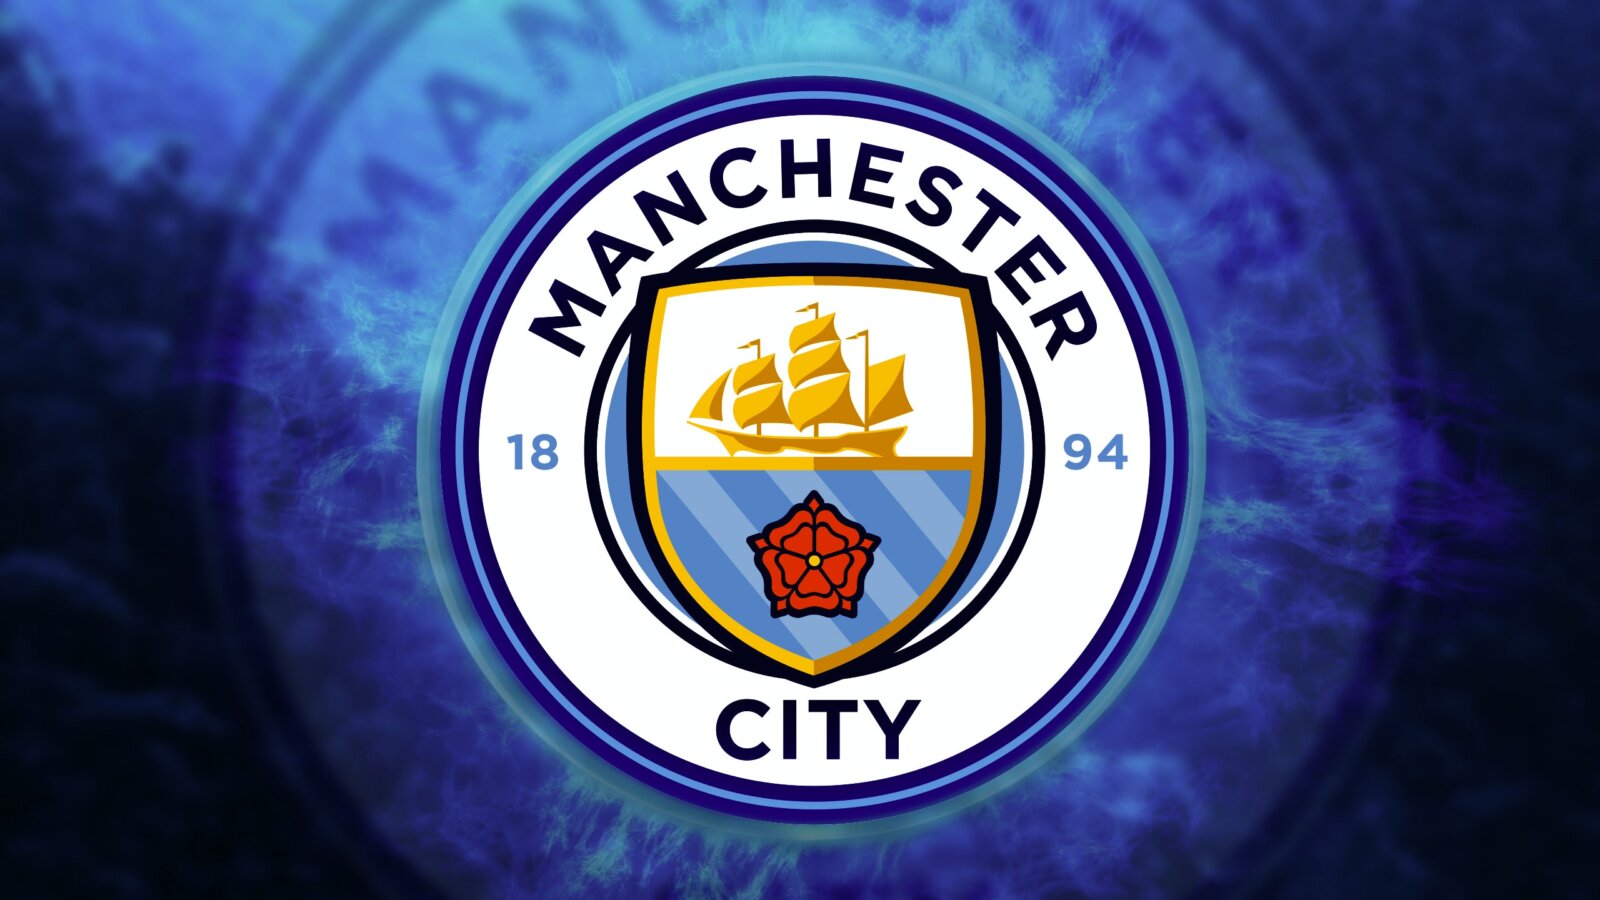 Man City Champions League ban overturned, The Manc